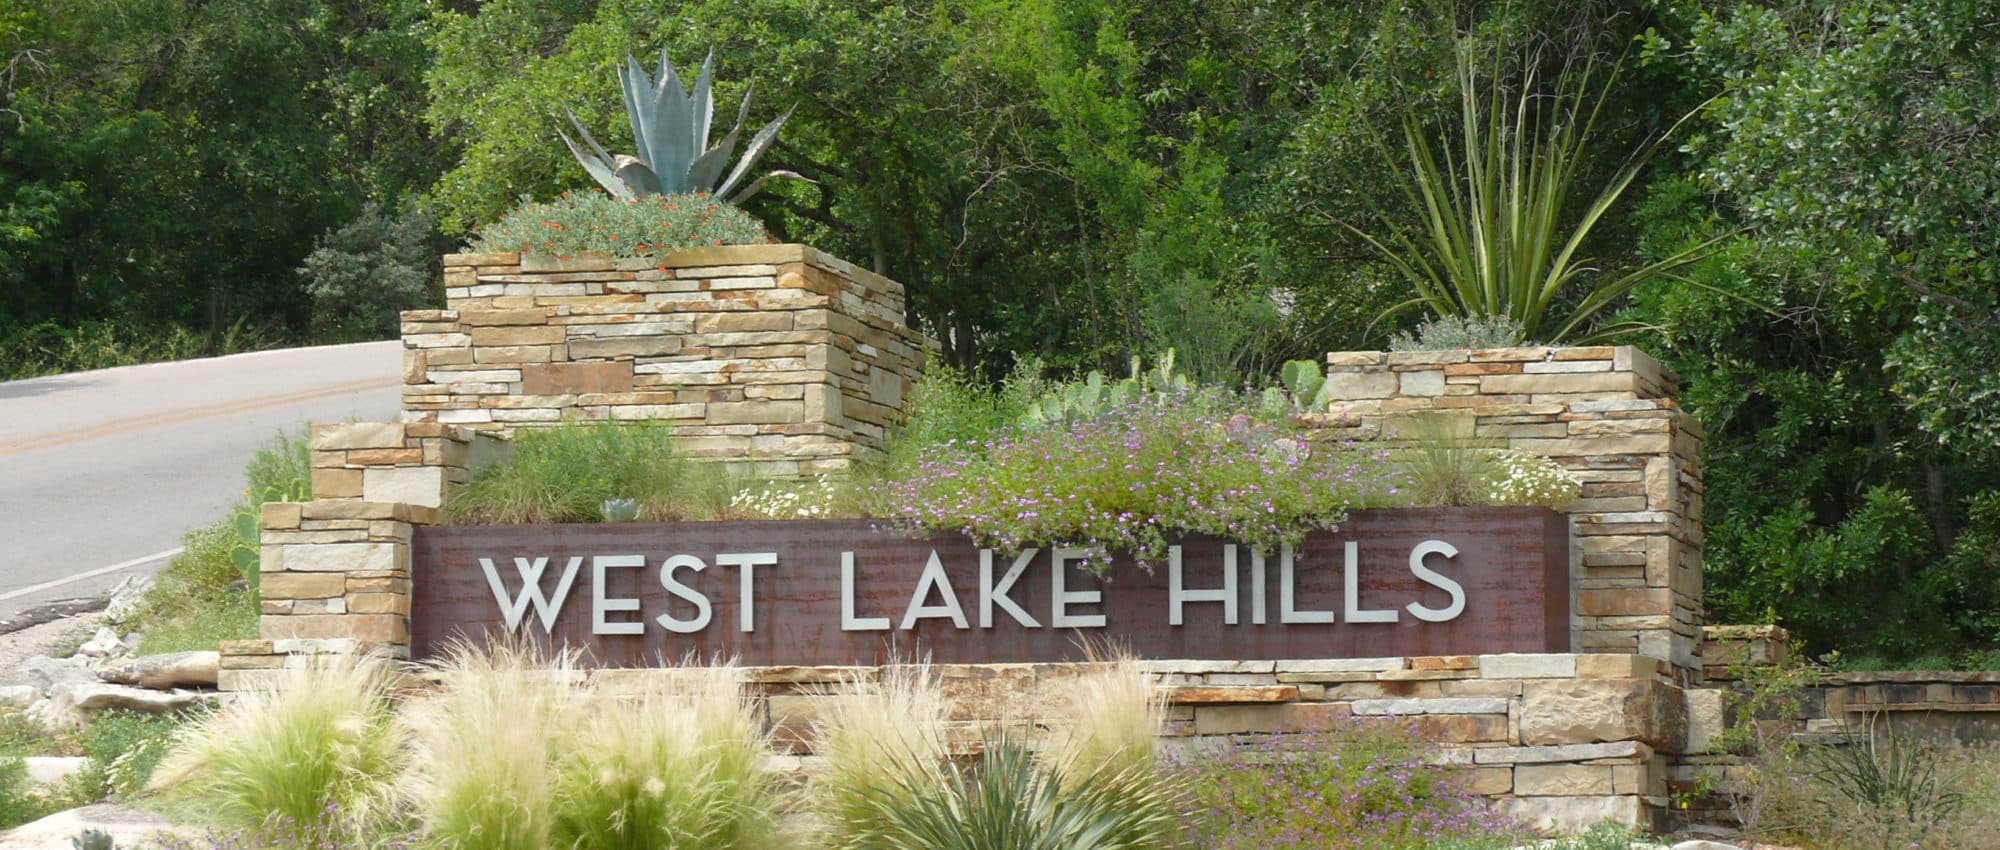 West Lake Hills sign